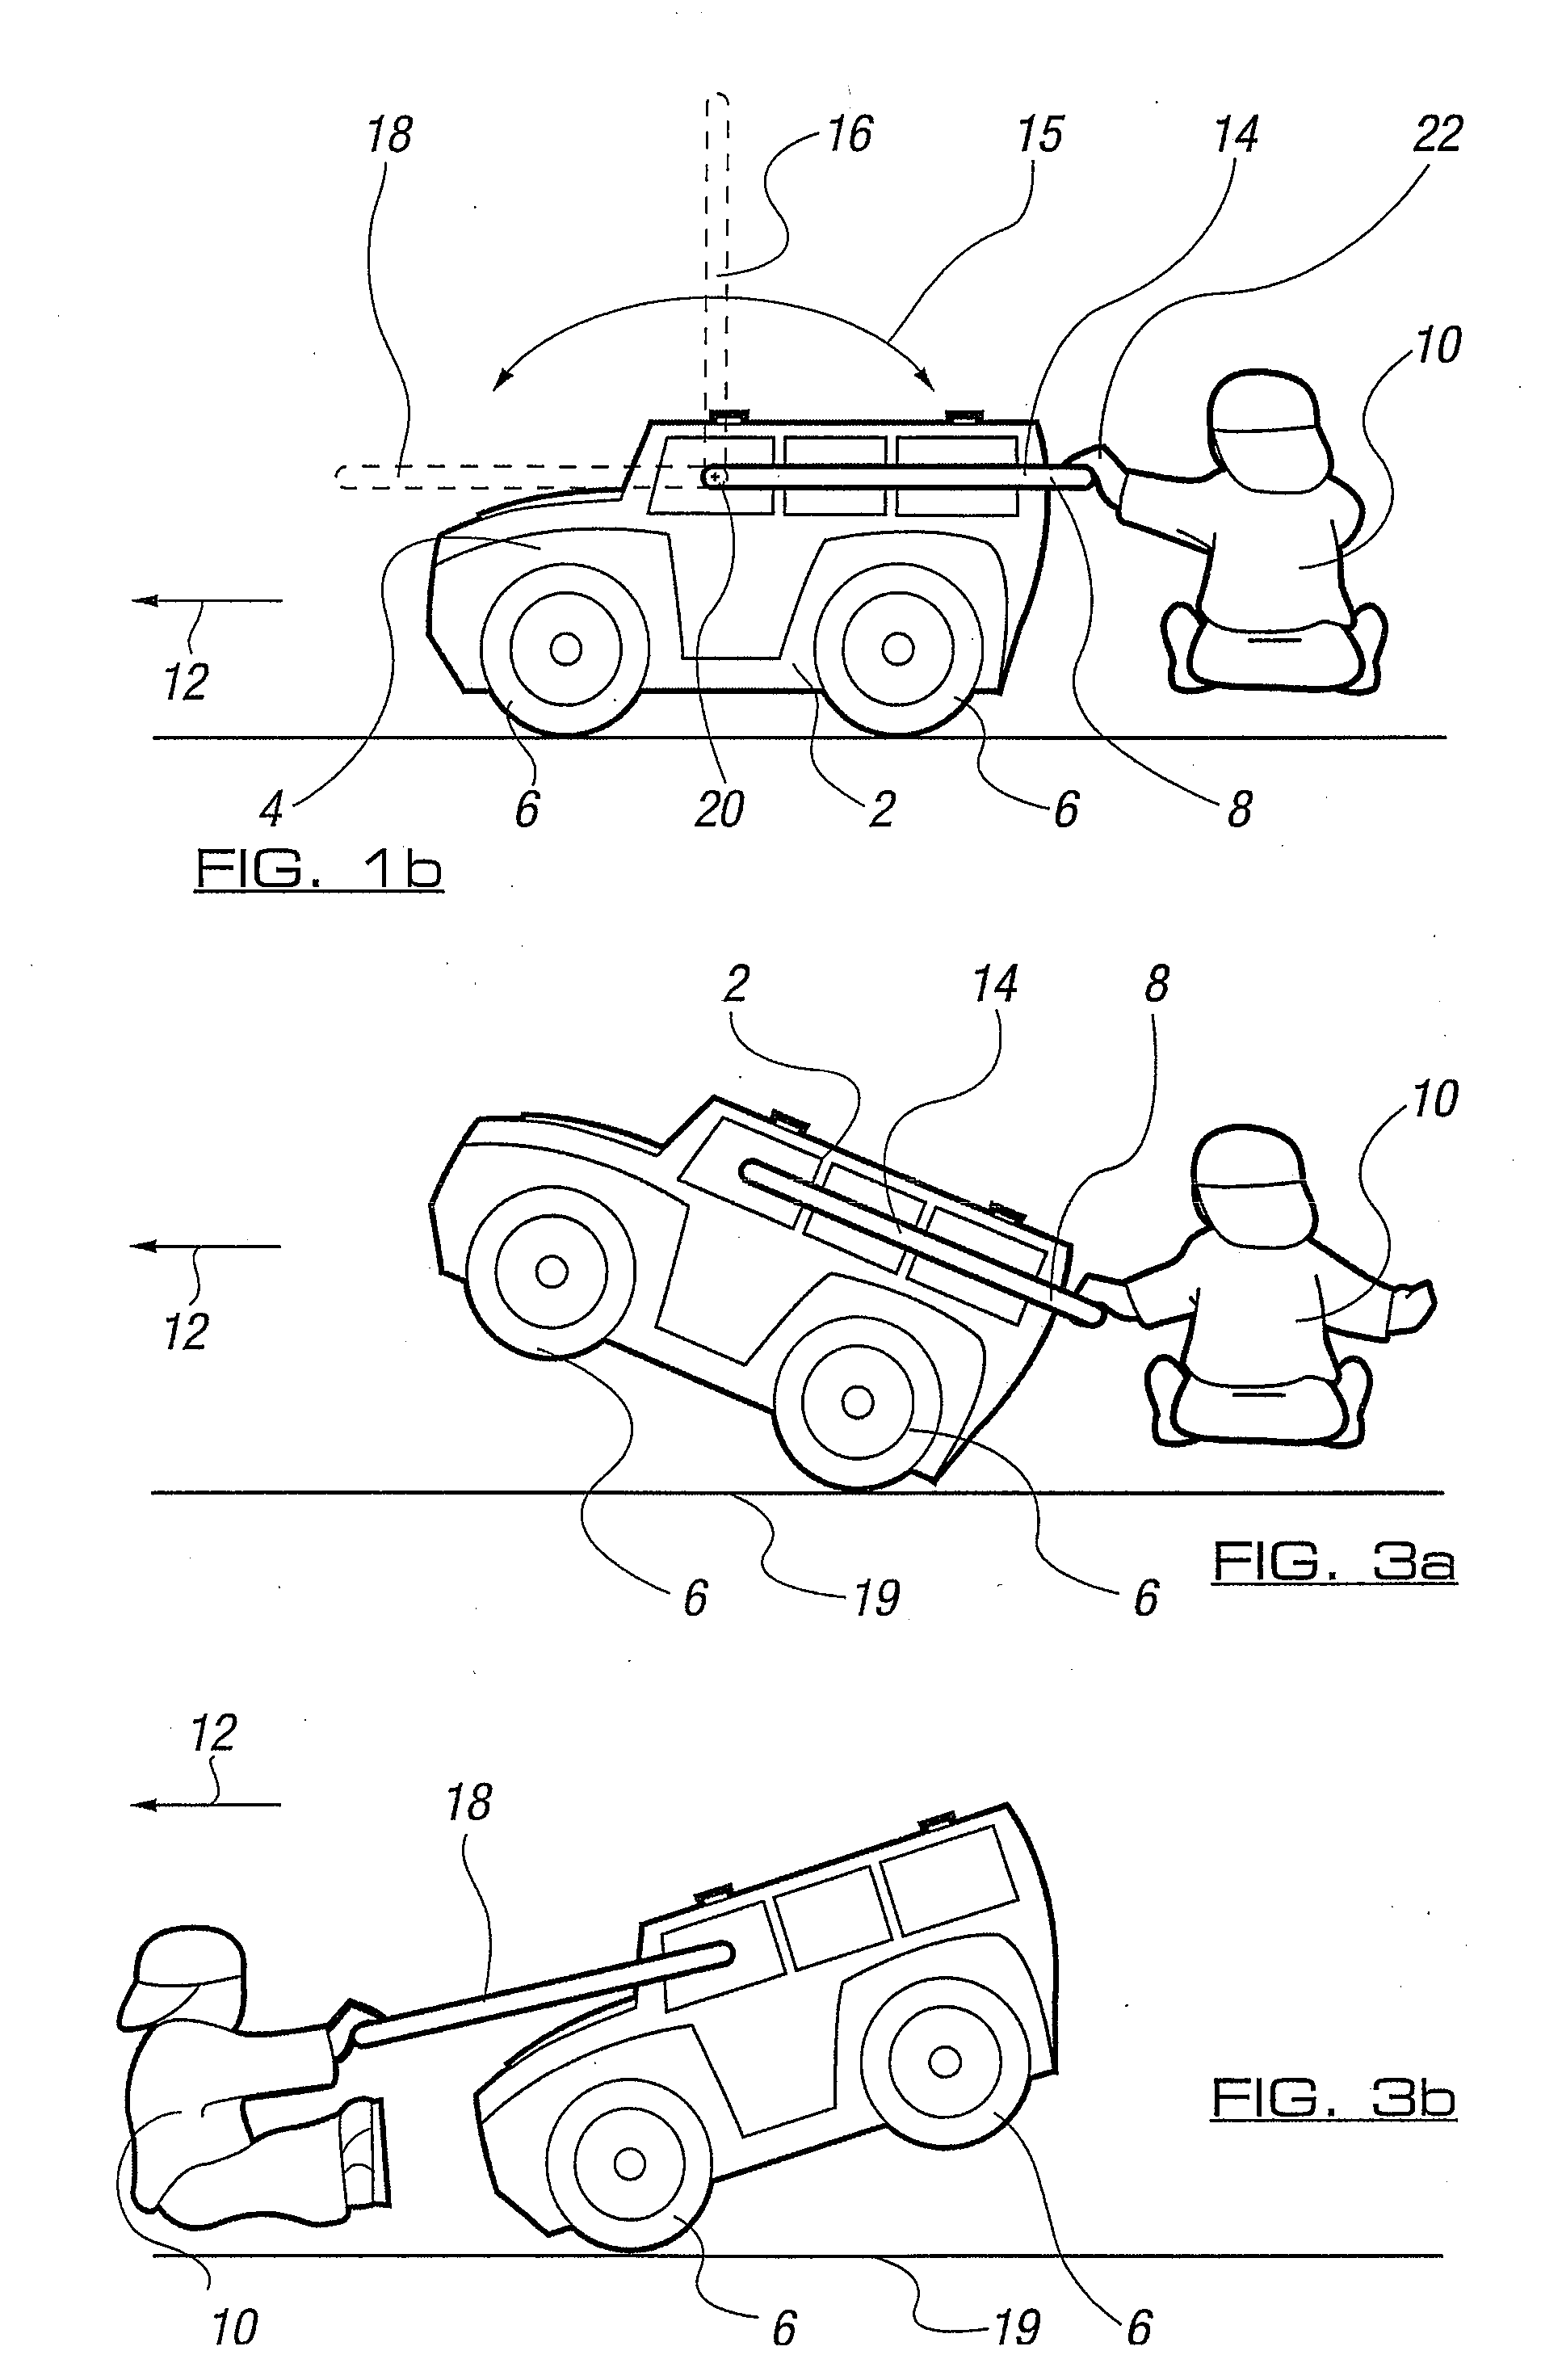 Toy vehicle